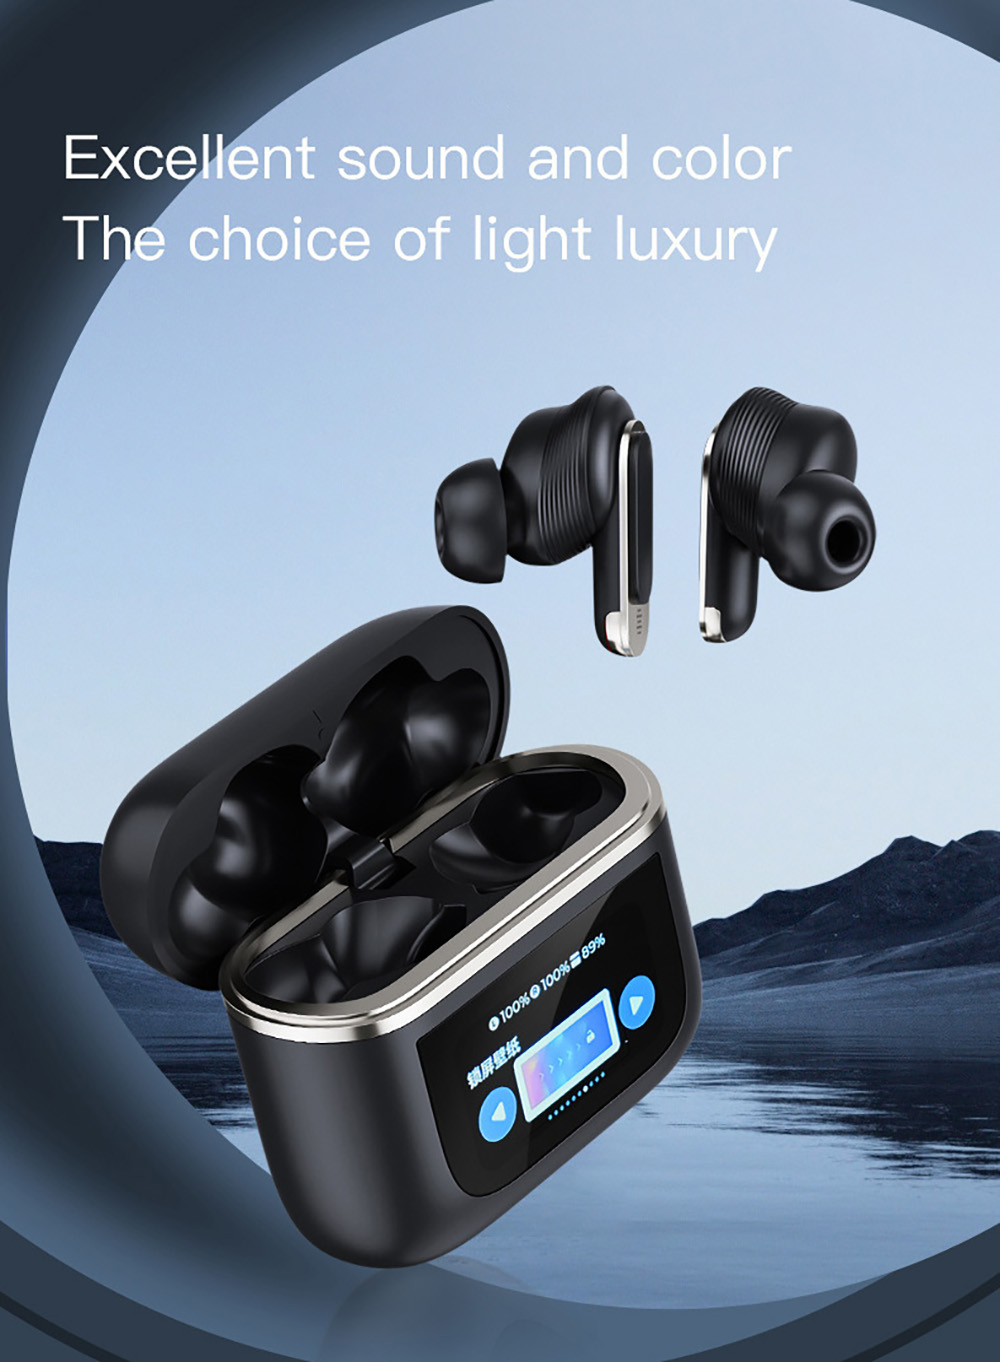 Smart LCD Touchscreen Bluetooth 5.3 Earbuds, Waterproof Wireless Sport Headphones - Black